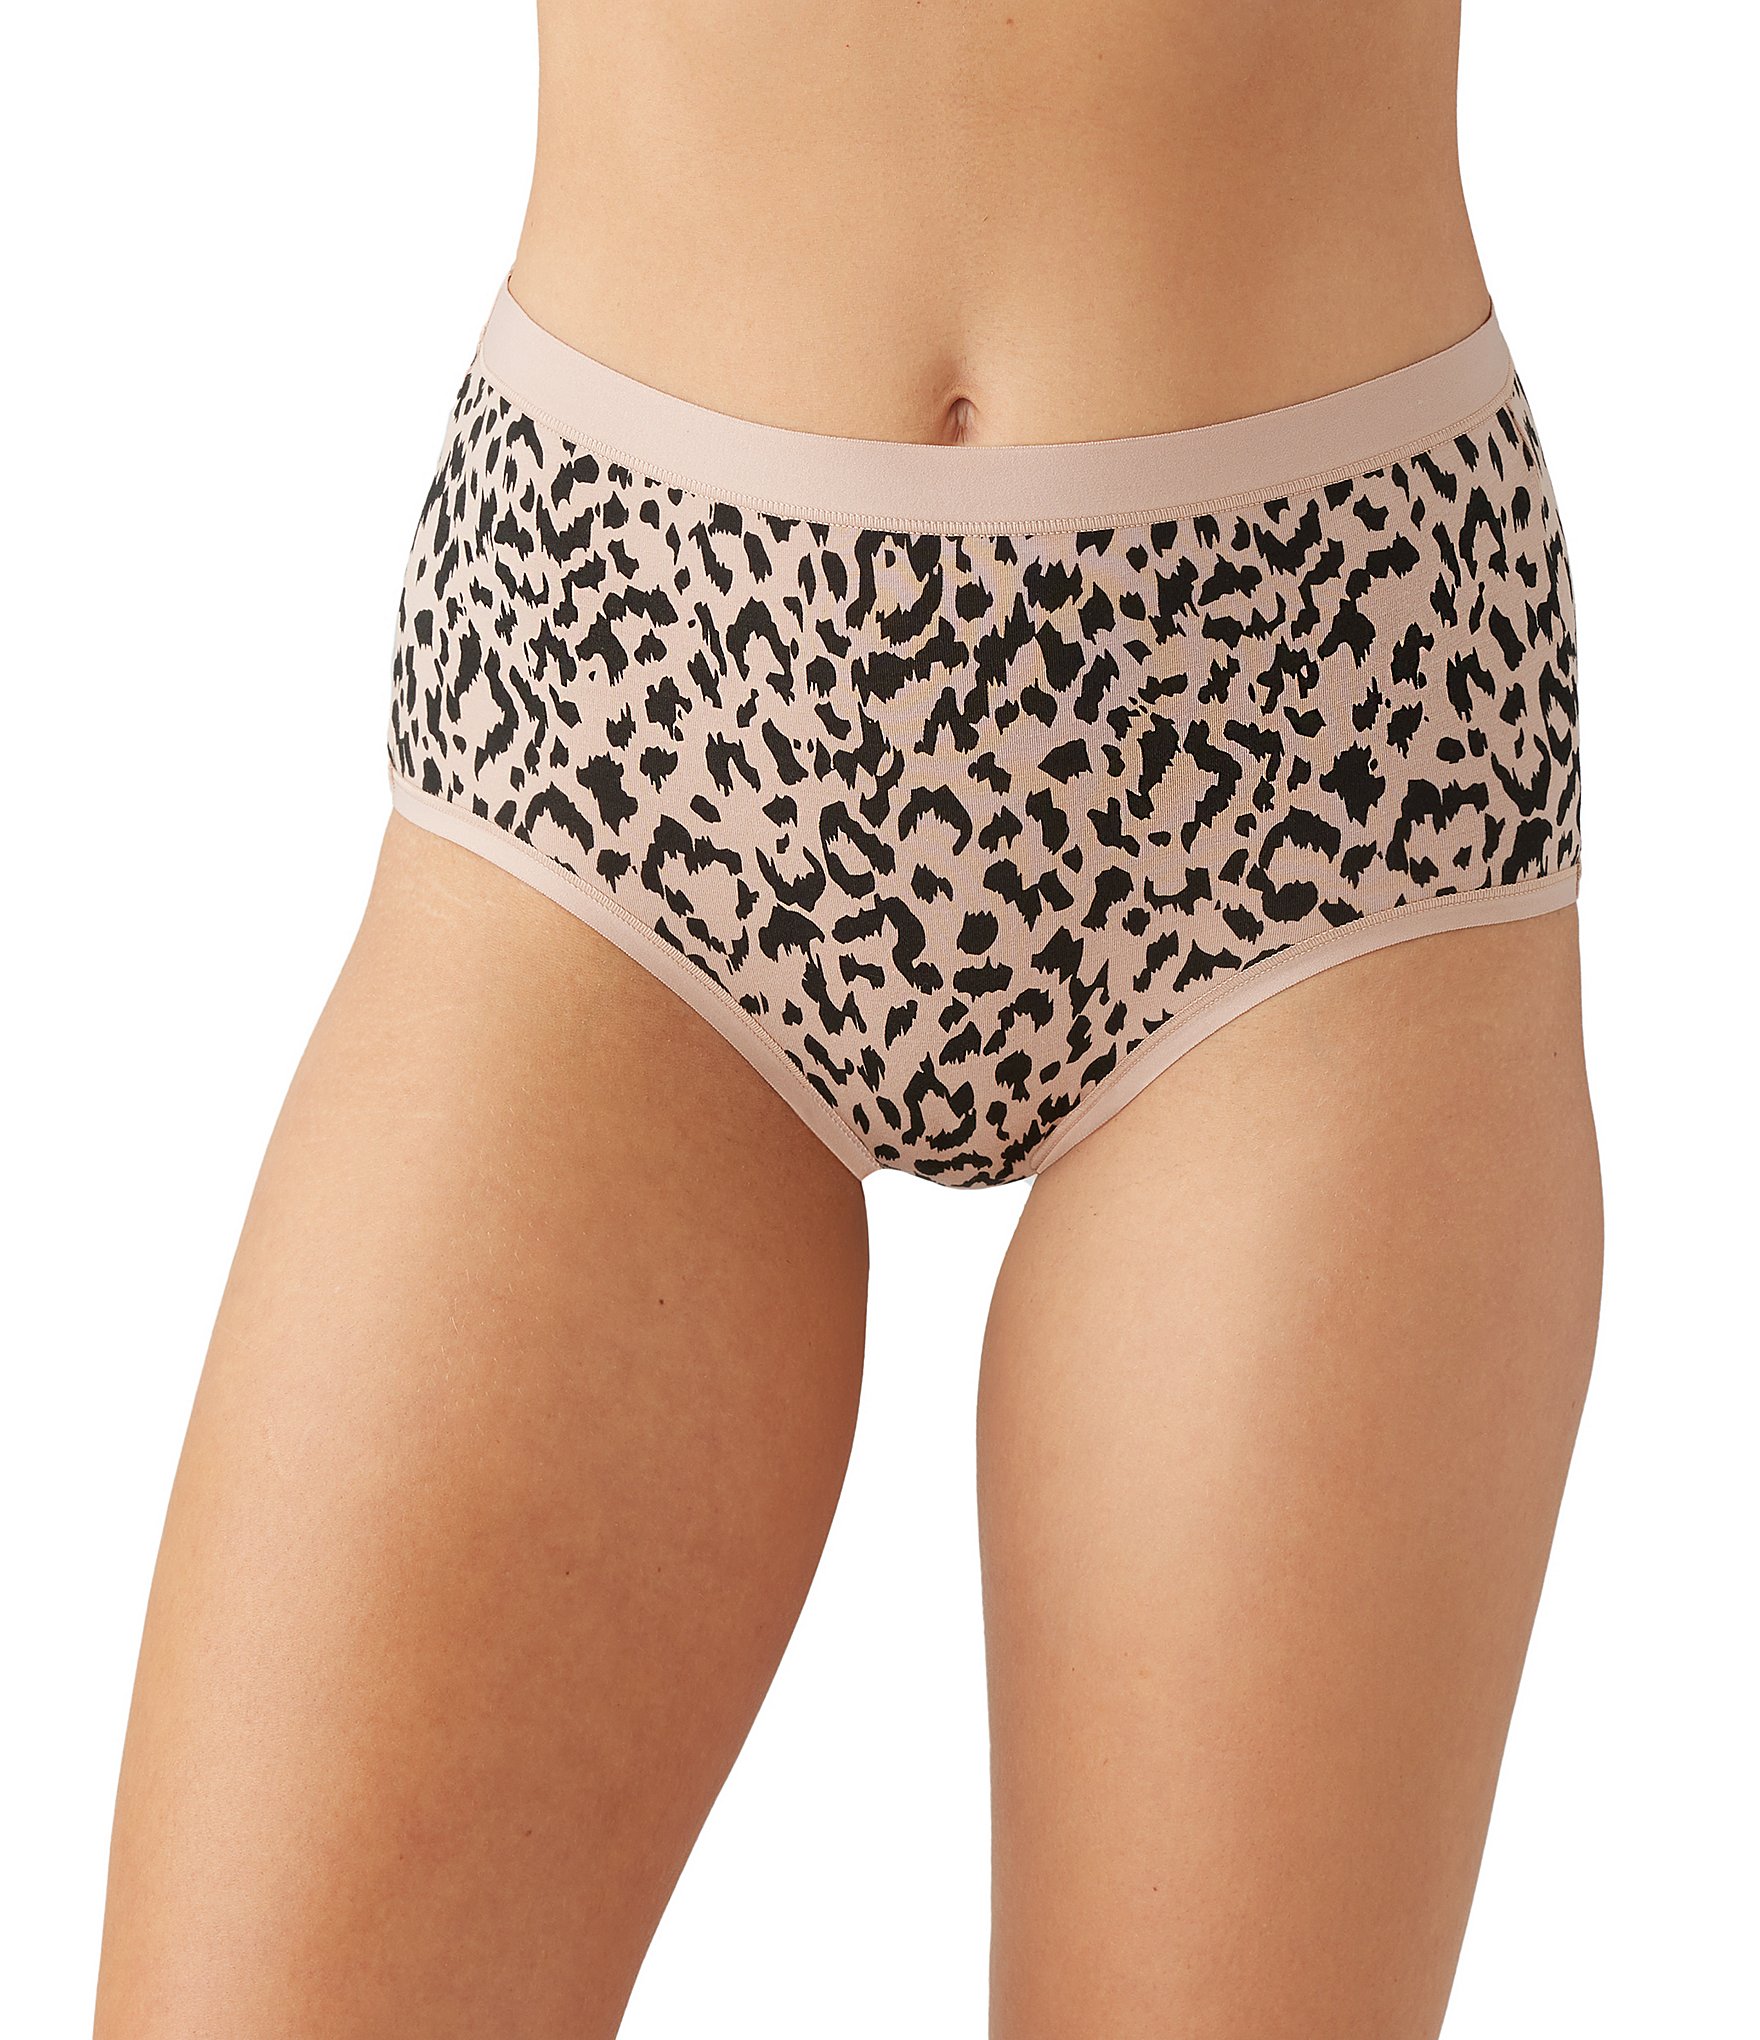 Wacoal Cheetah Print Understated Cotton Brief Panty